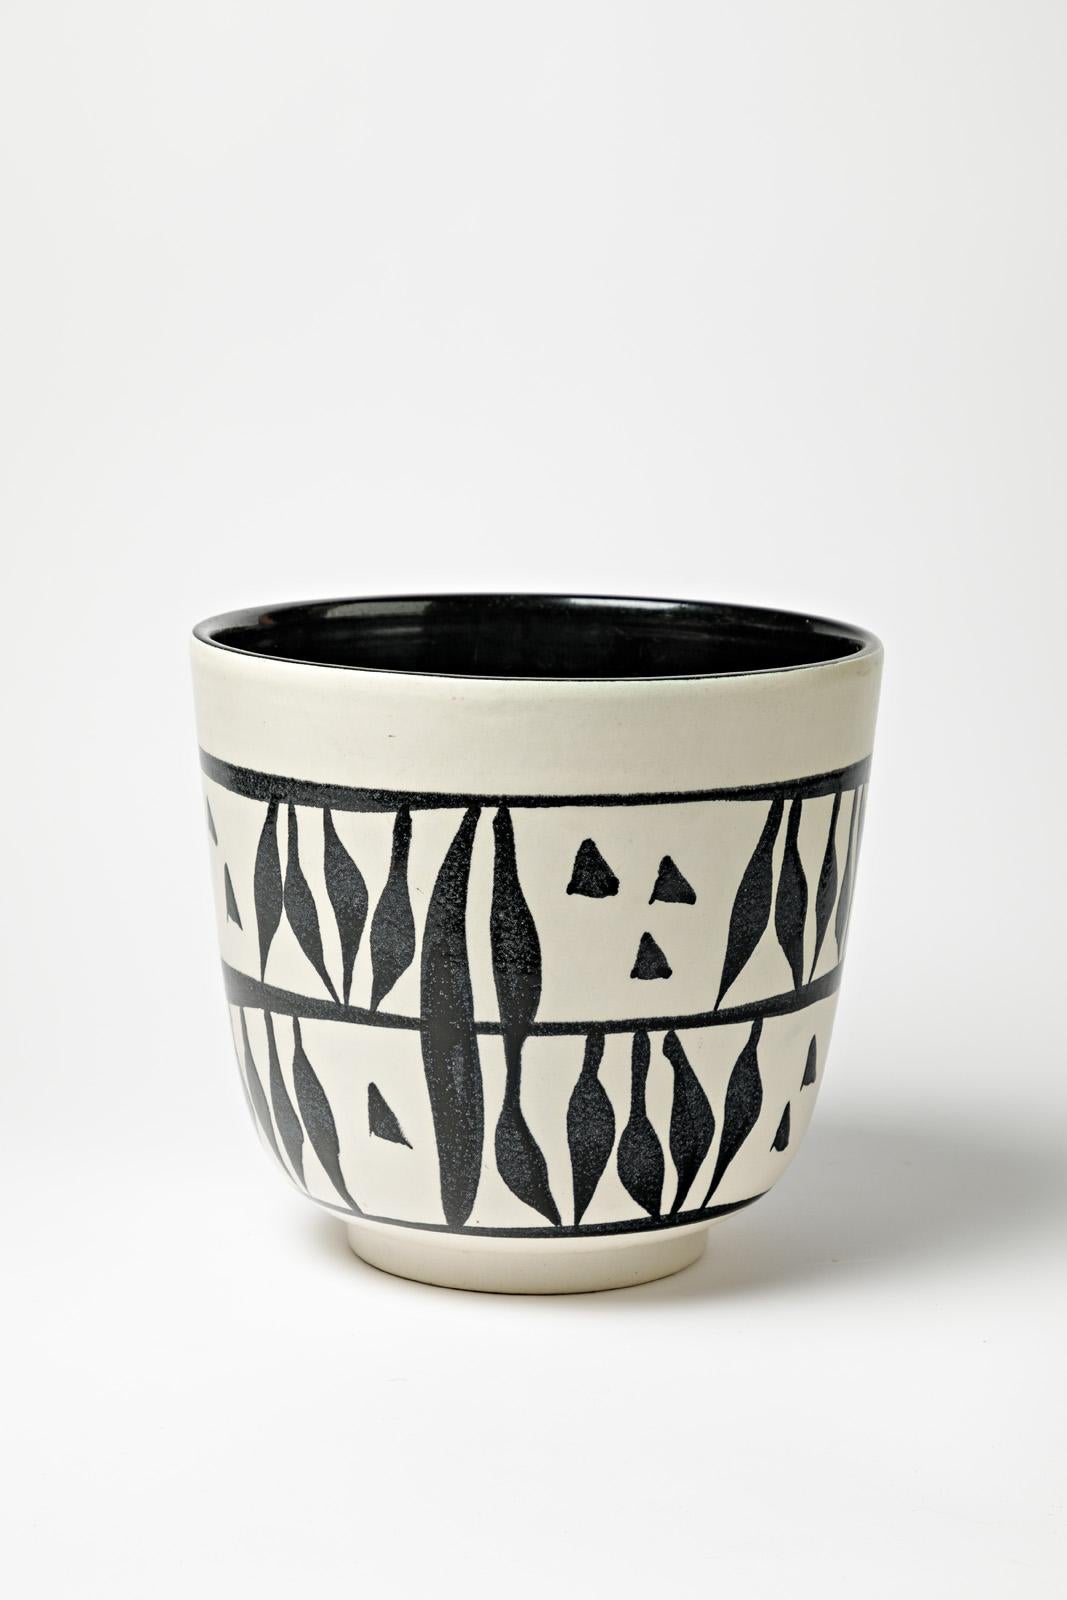 Mid-Century Modern Black and White 20th Century Ceramic Planter Cachepot Vase by Elchinger, 1950 For Sale